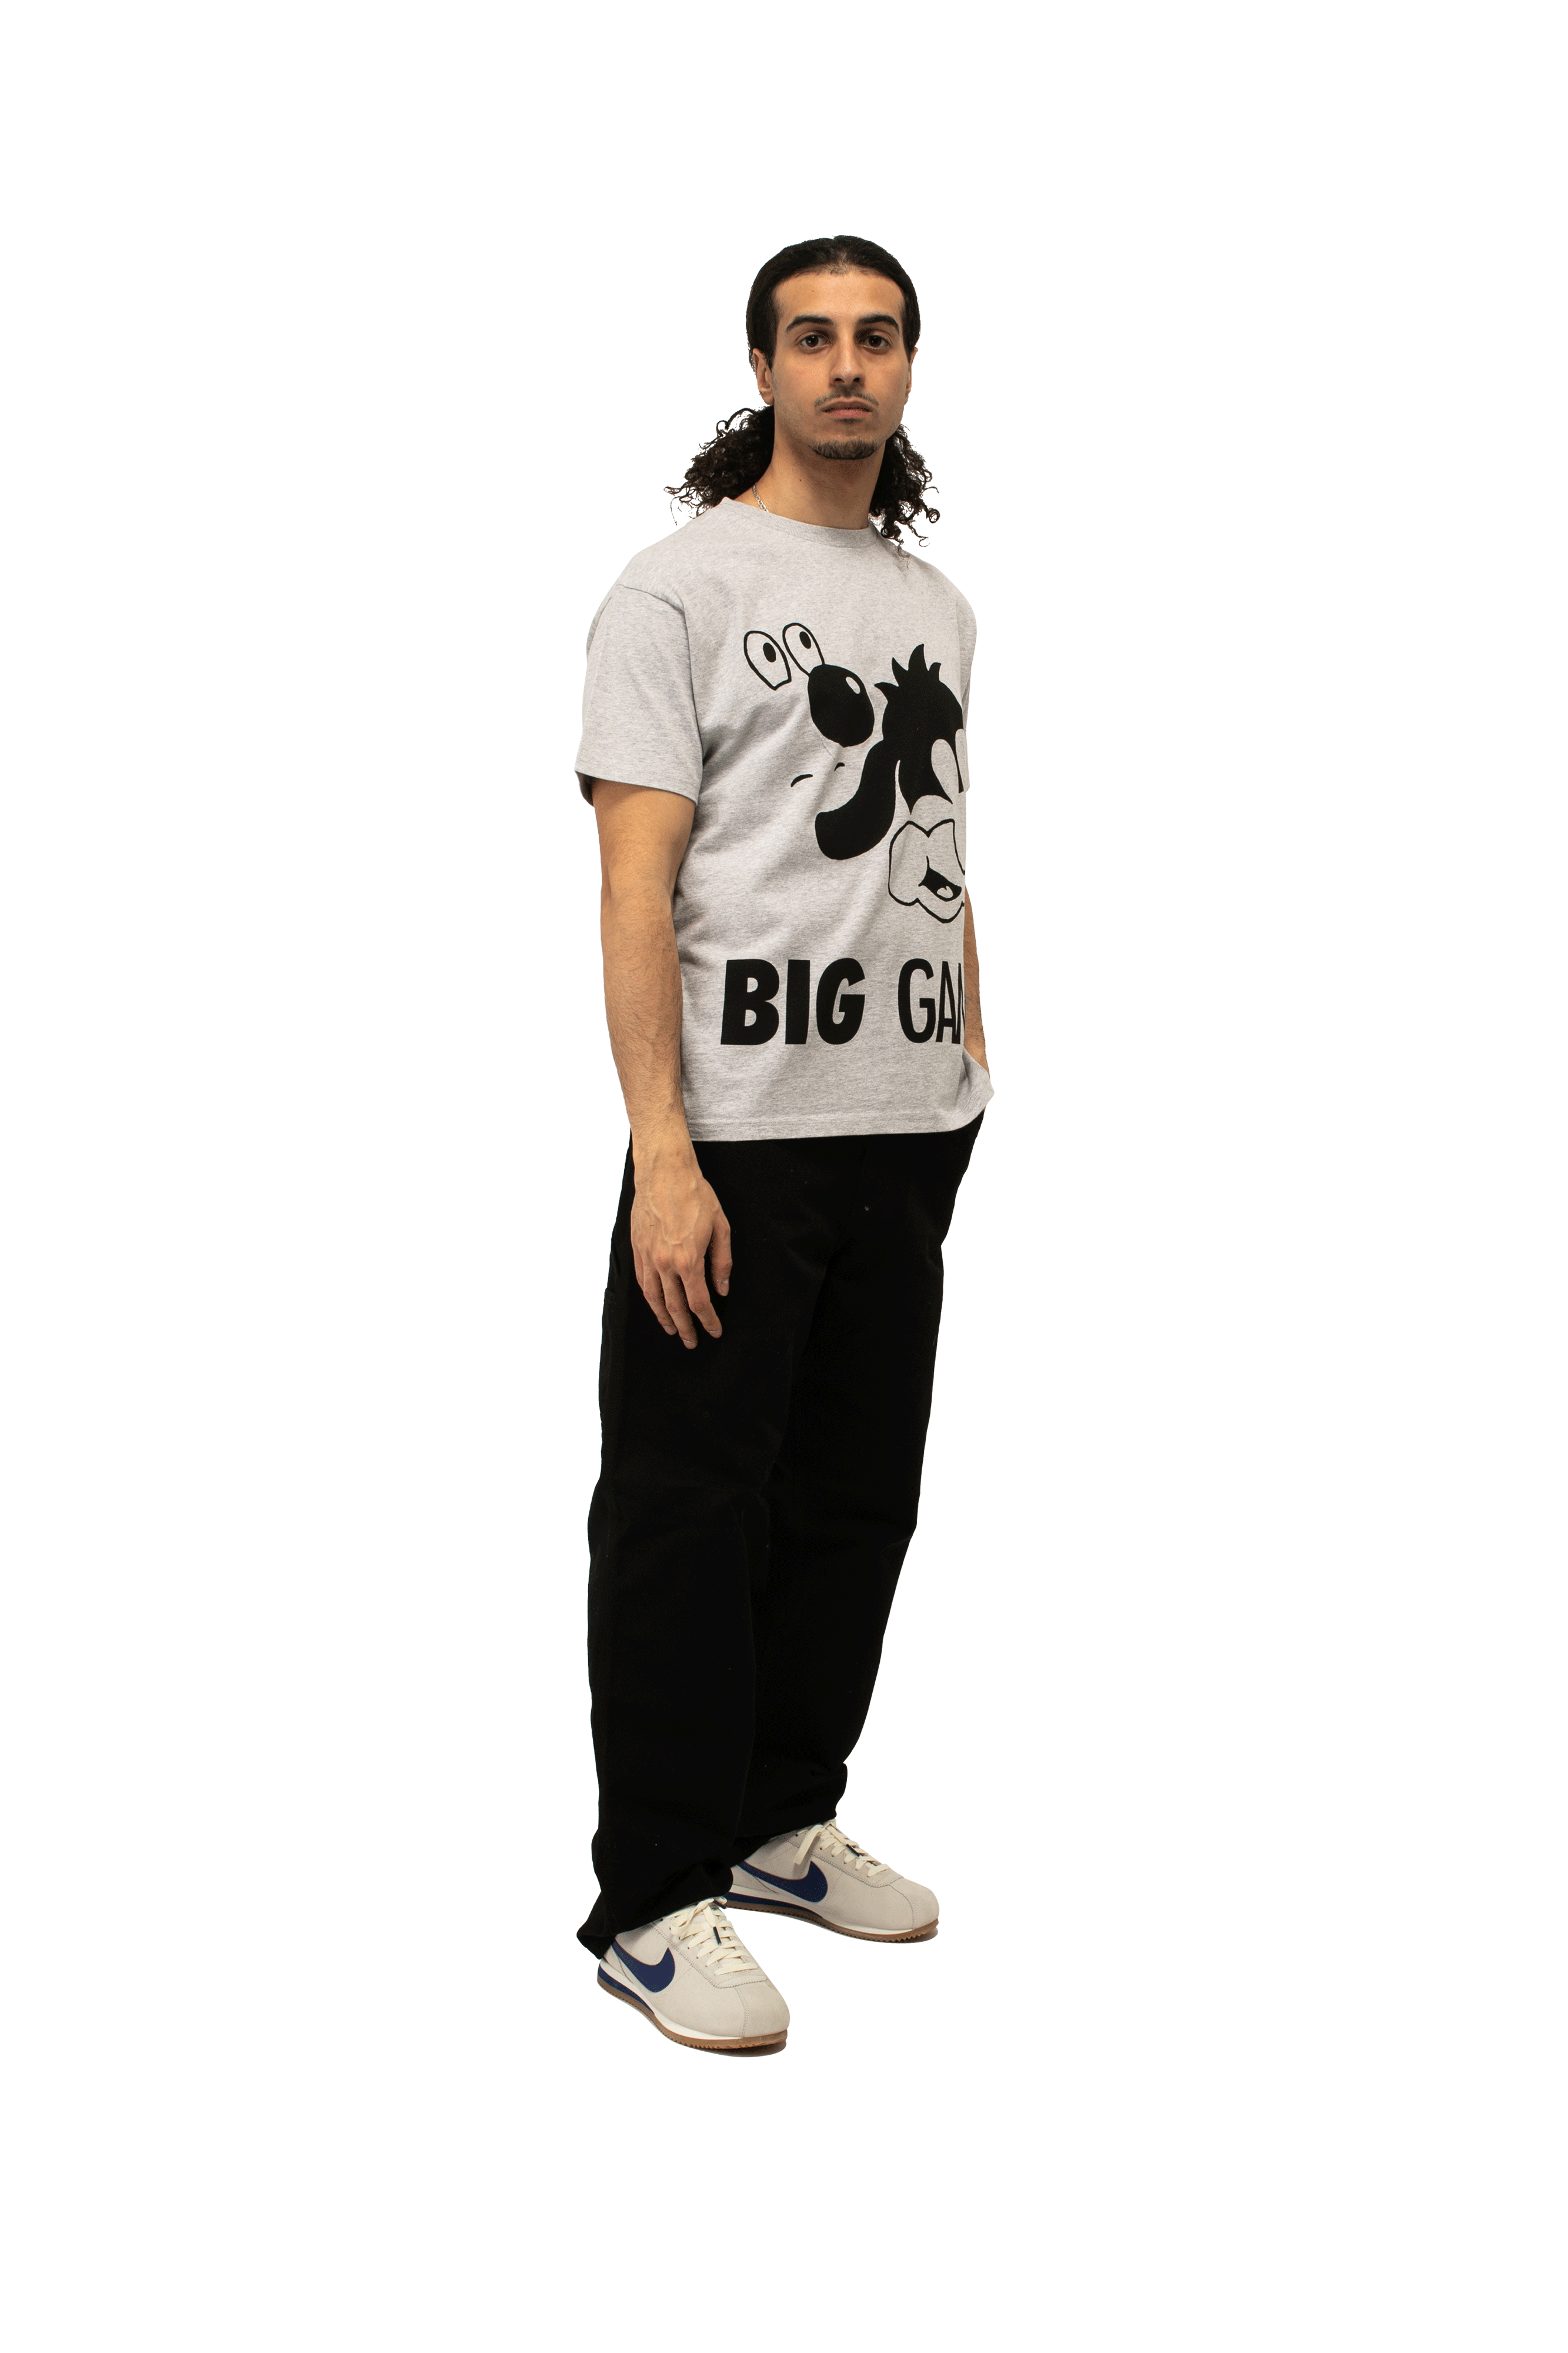 "Big Game" T-Shirt